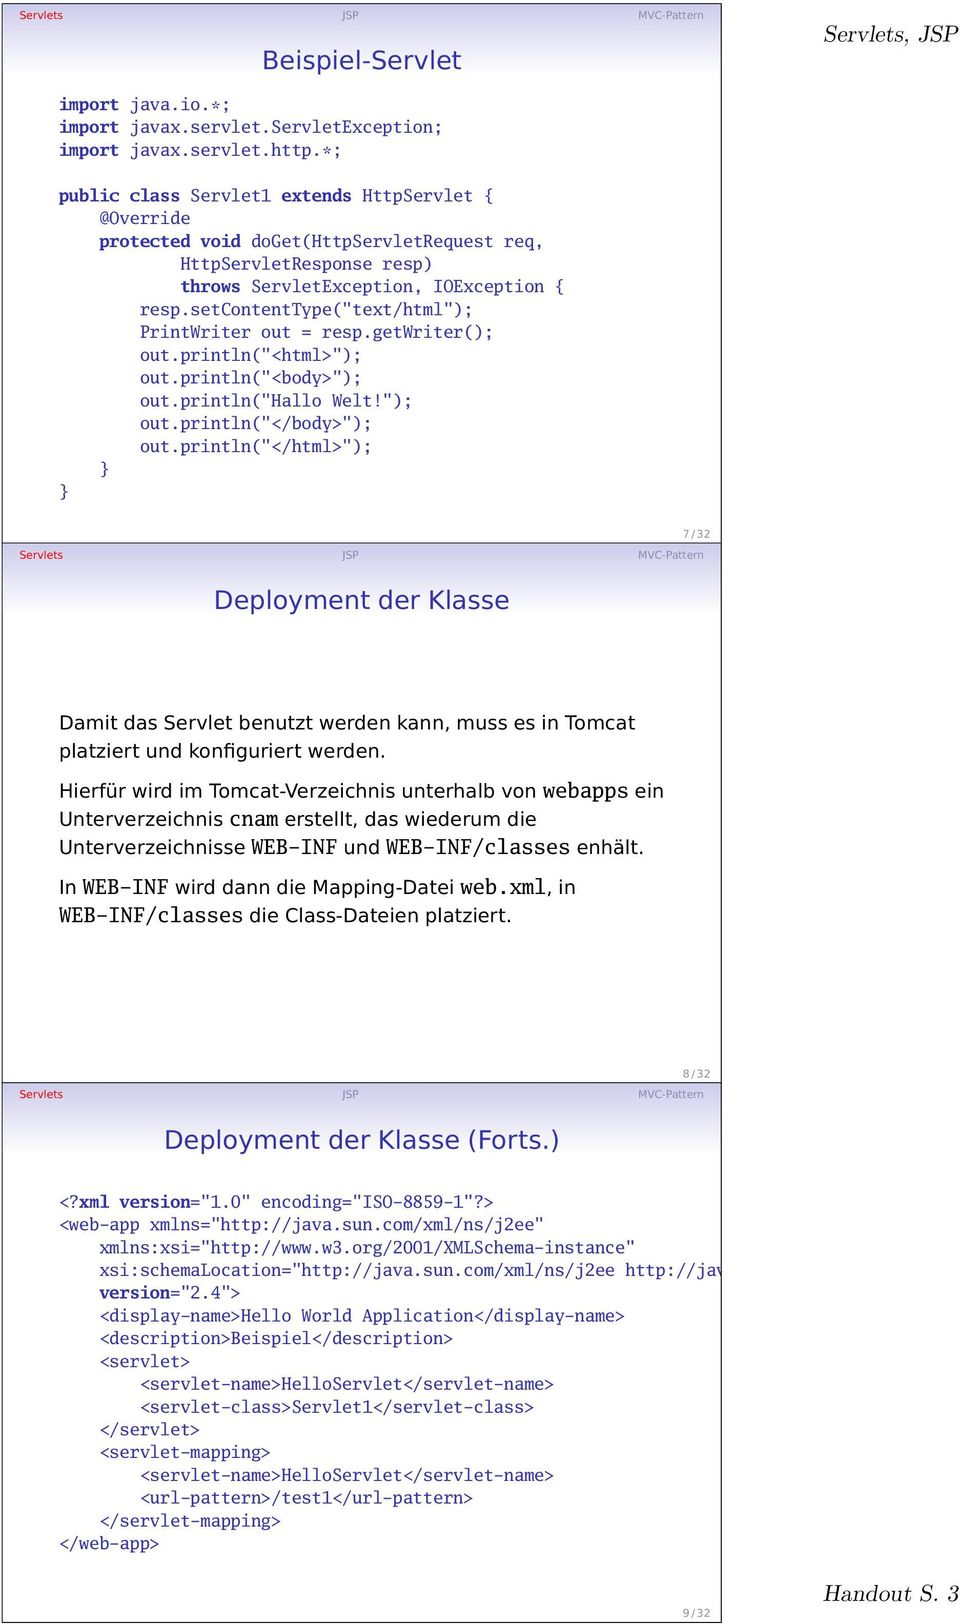 setcontenttype("text/html"); PrintWriter out = resp.getwriter(); out.println("<html>"); out.println("<body>"); out.println("hallo Welt!"); out.println("</body>"); out.